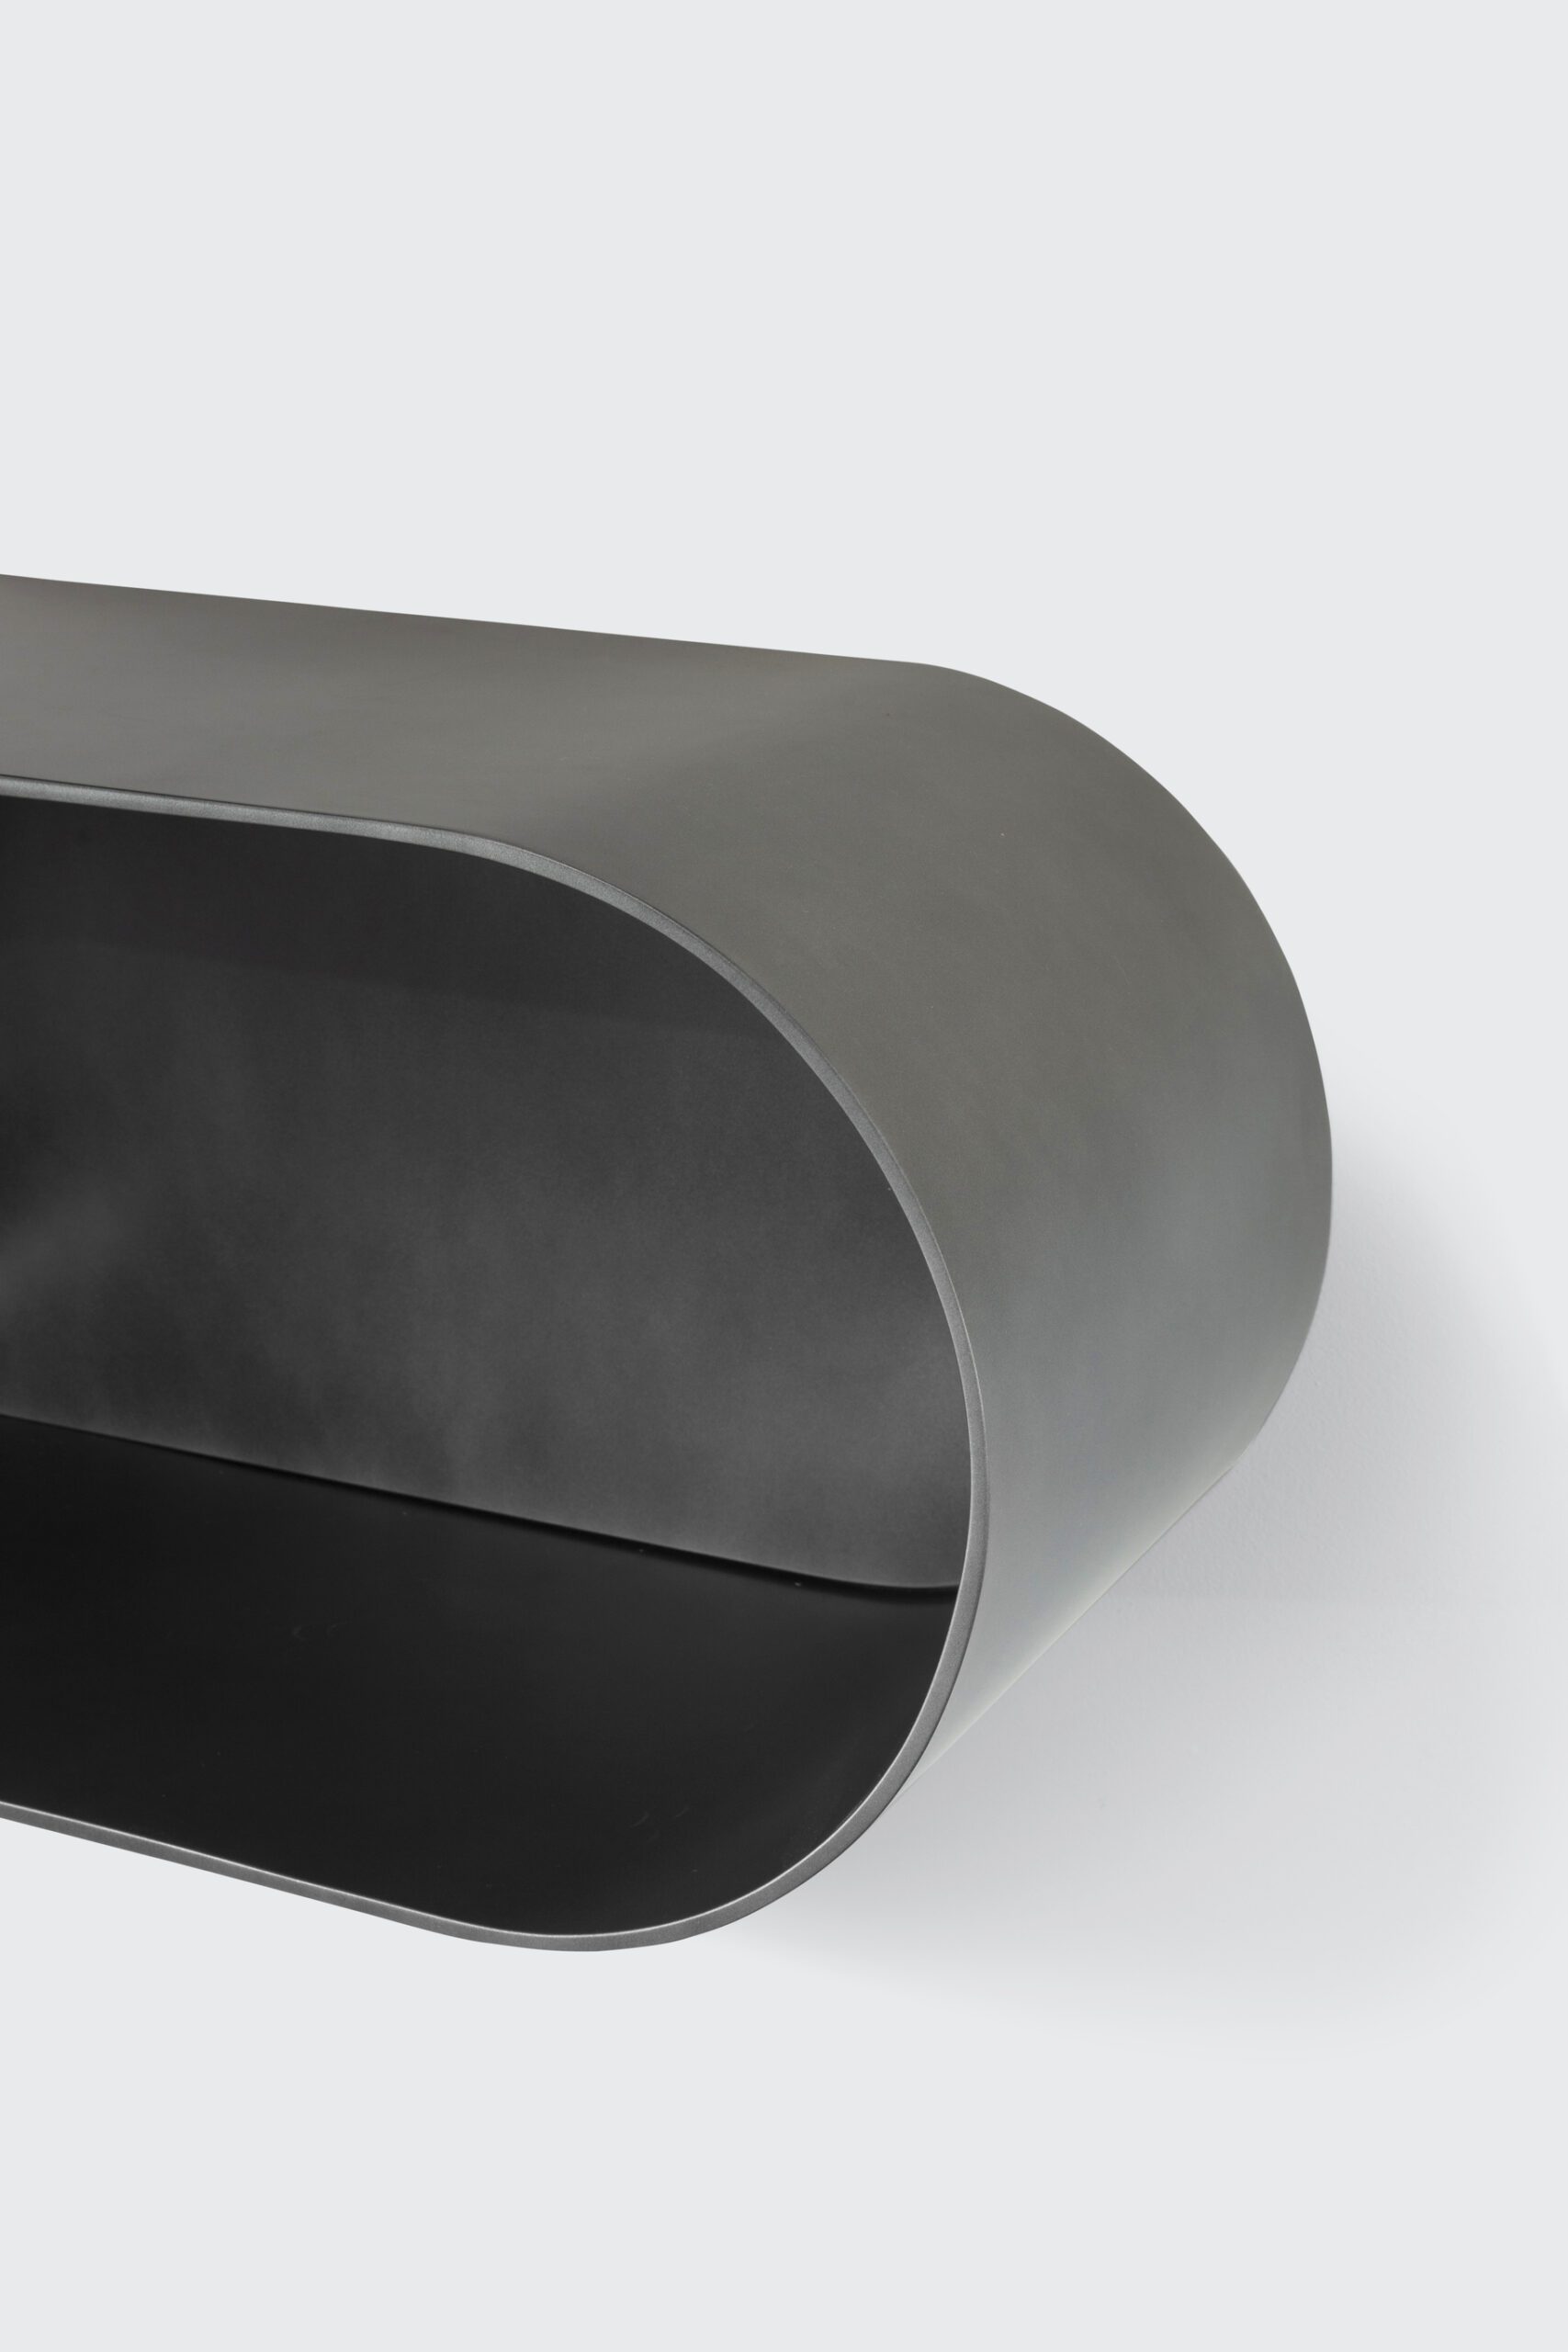 SAV grand petite oval niche interior design architecture product furniture luxury black onyx fiberglass 160cm decor detail bedside table walls support living room